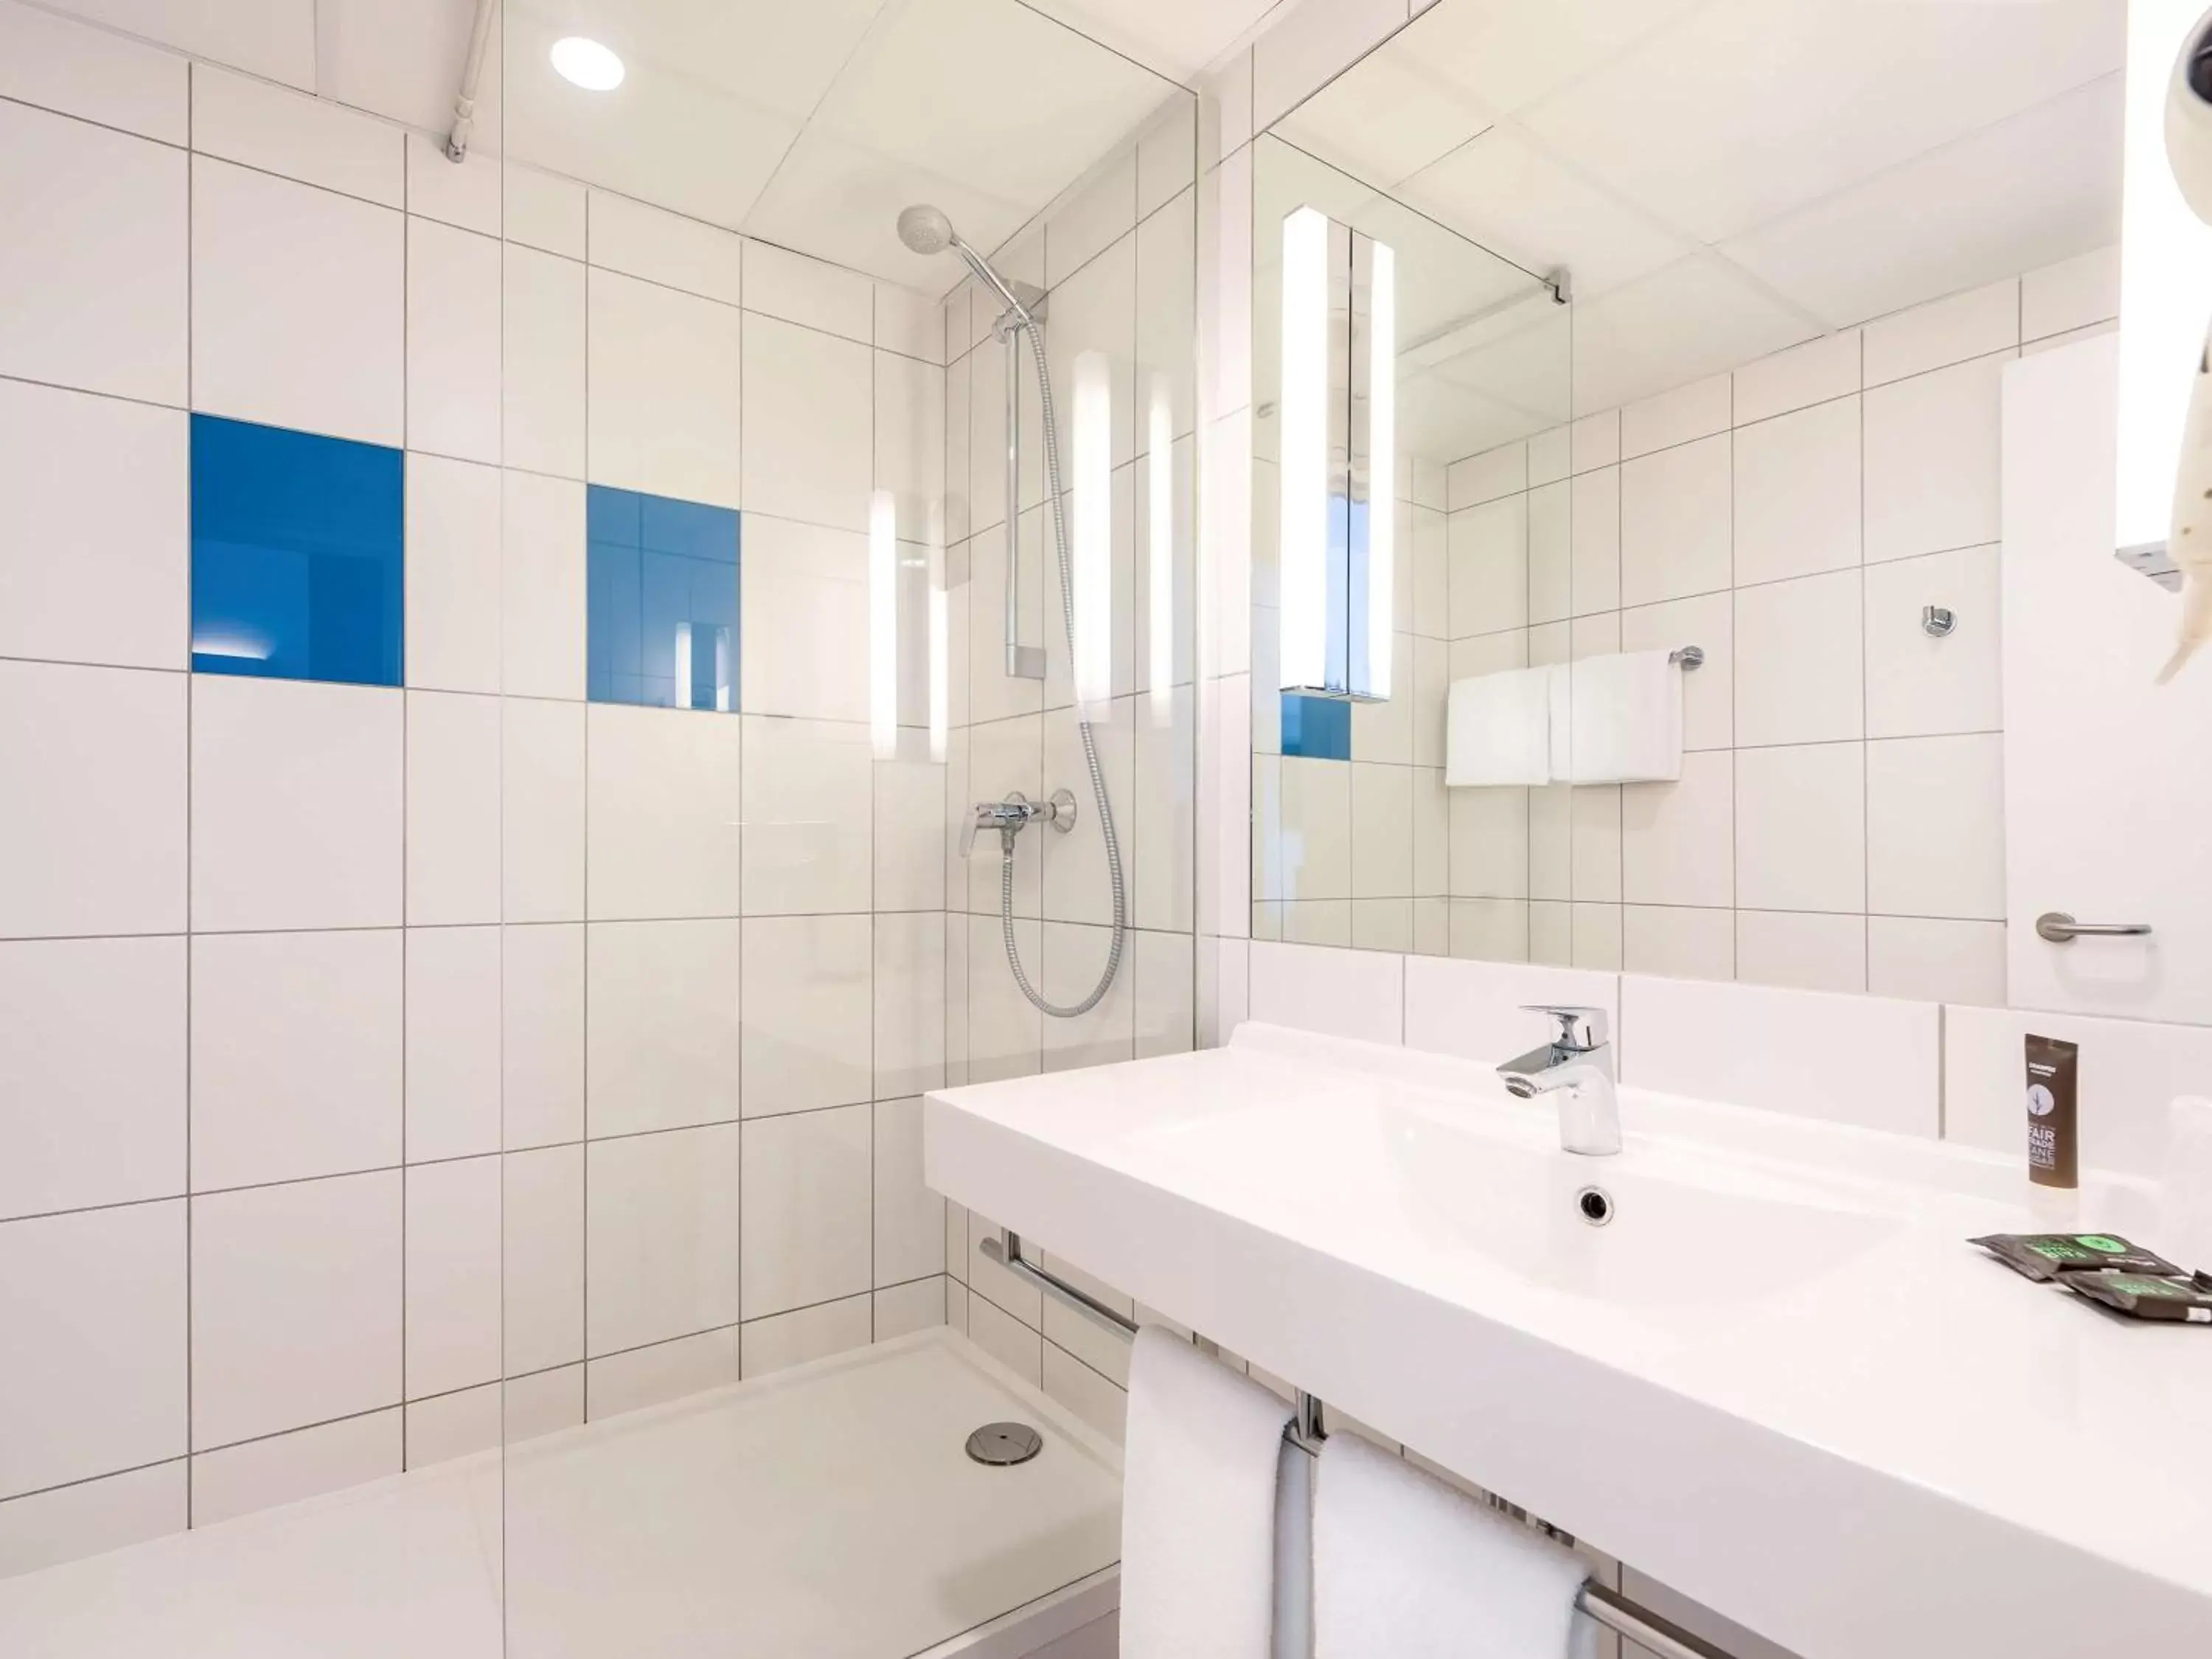 Photo of the whole room, Bathroom in Novotel Wrocław City